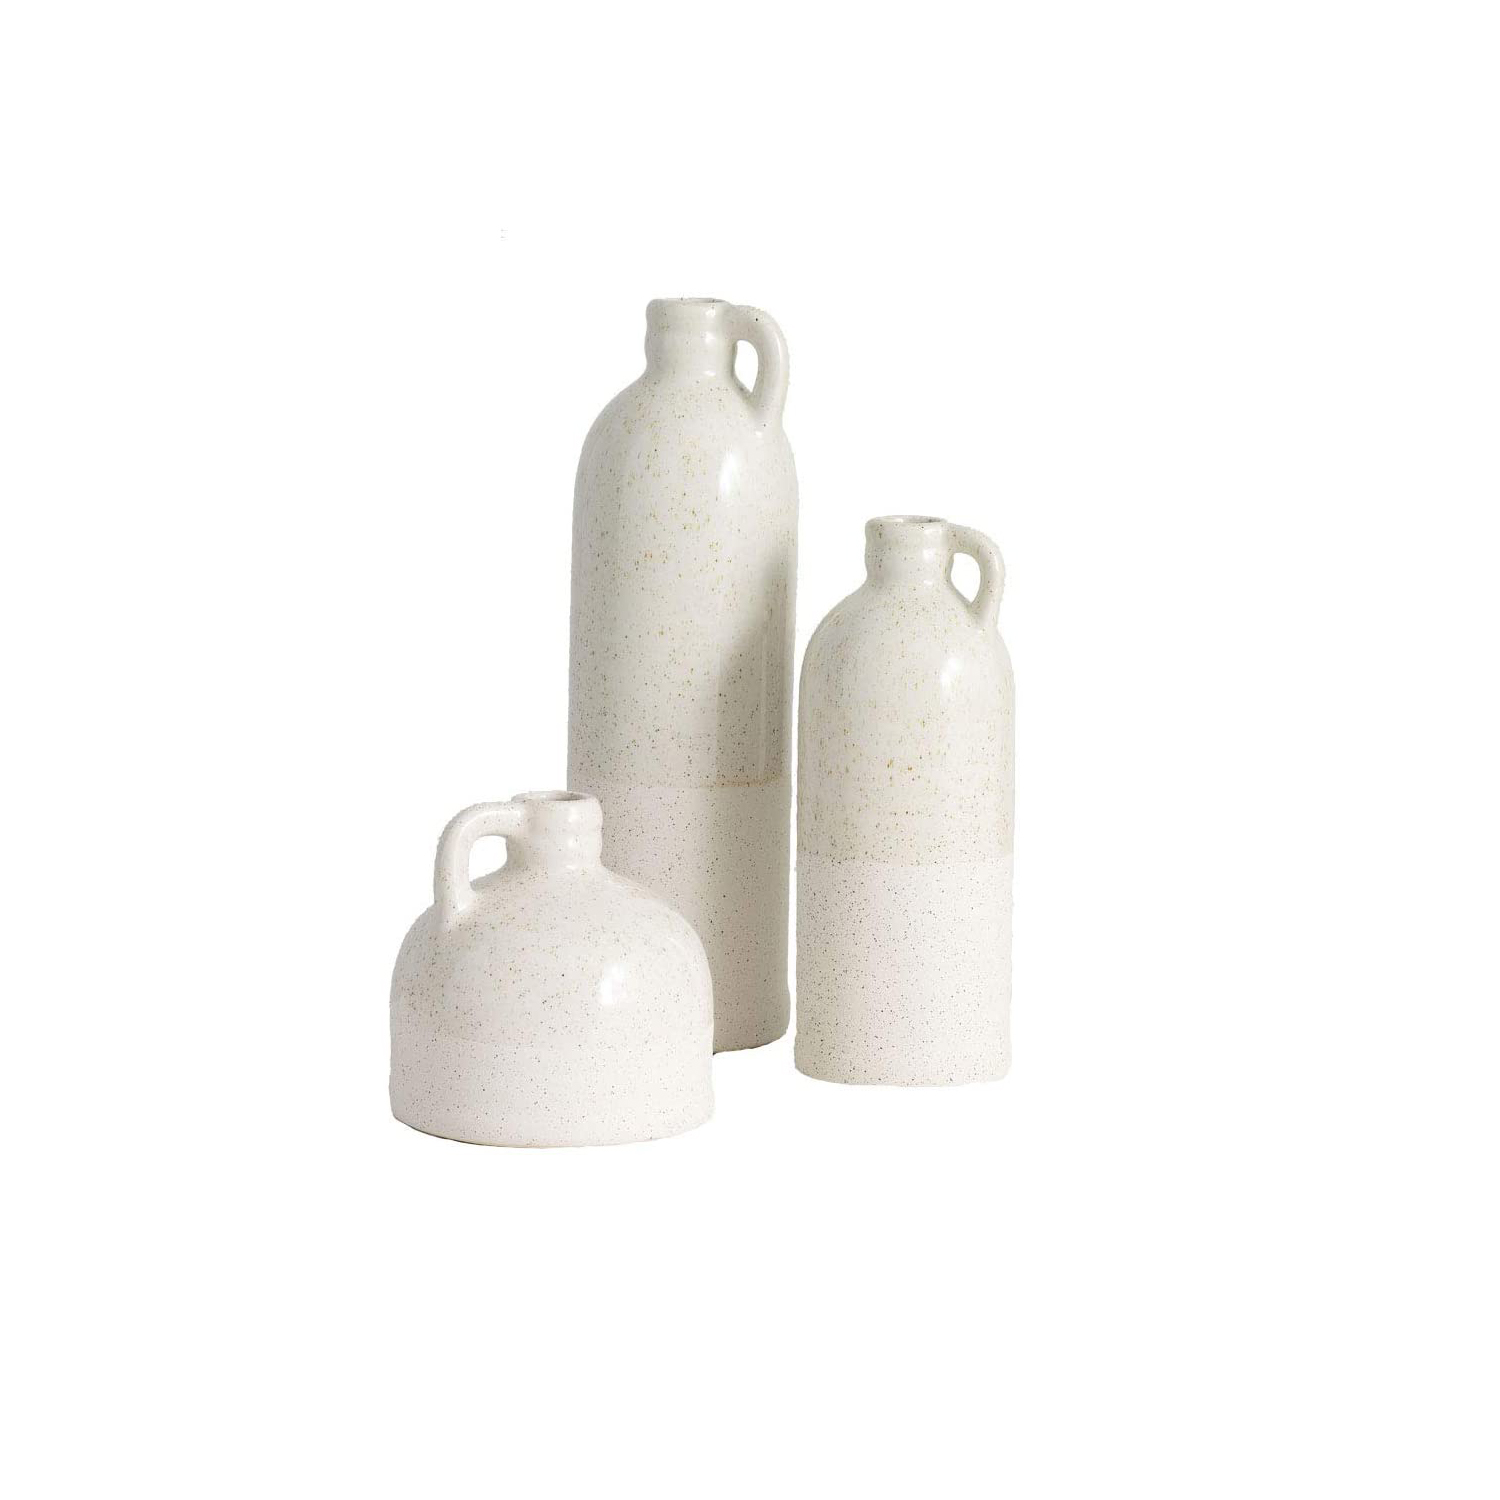 Rustic Farmhouse Office Ceramic Porcelain Jug Flower Vases For Home Decor